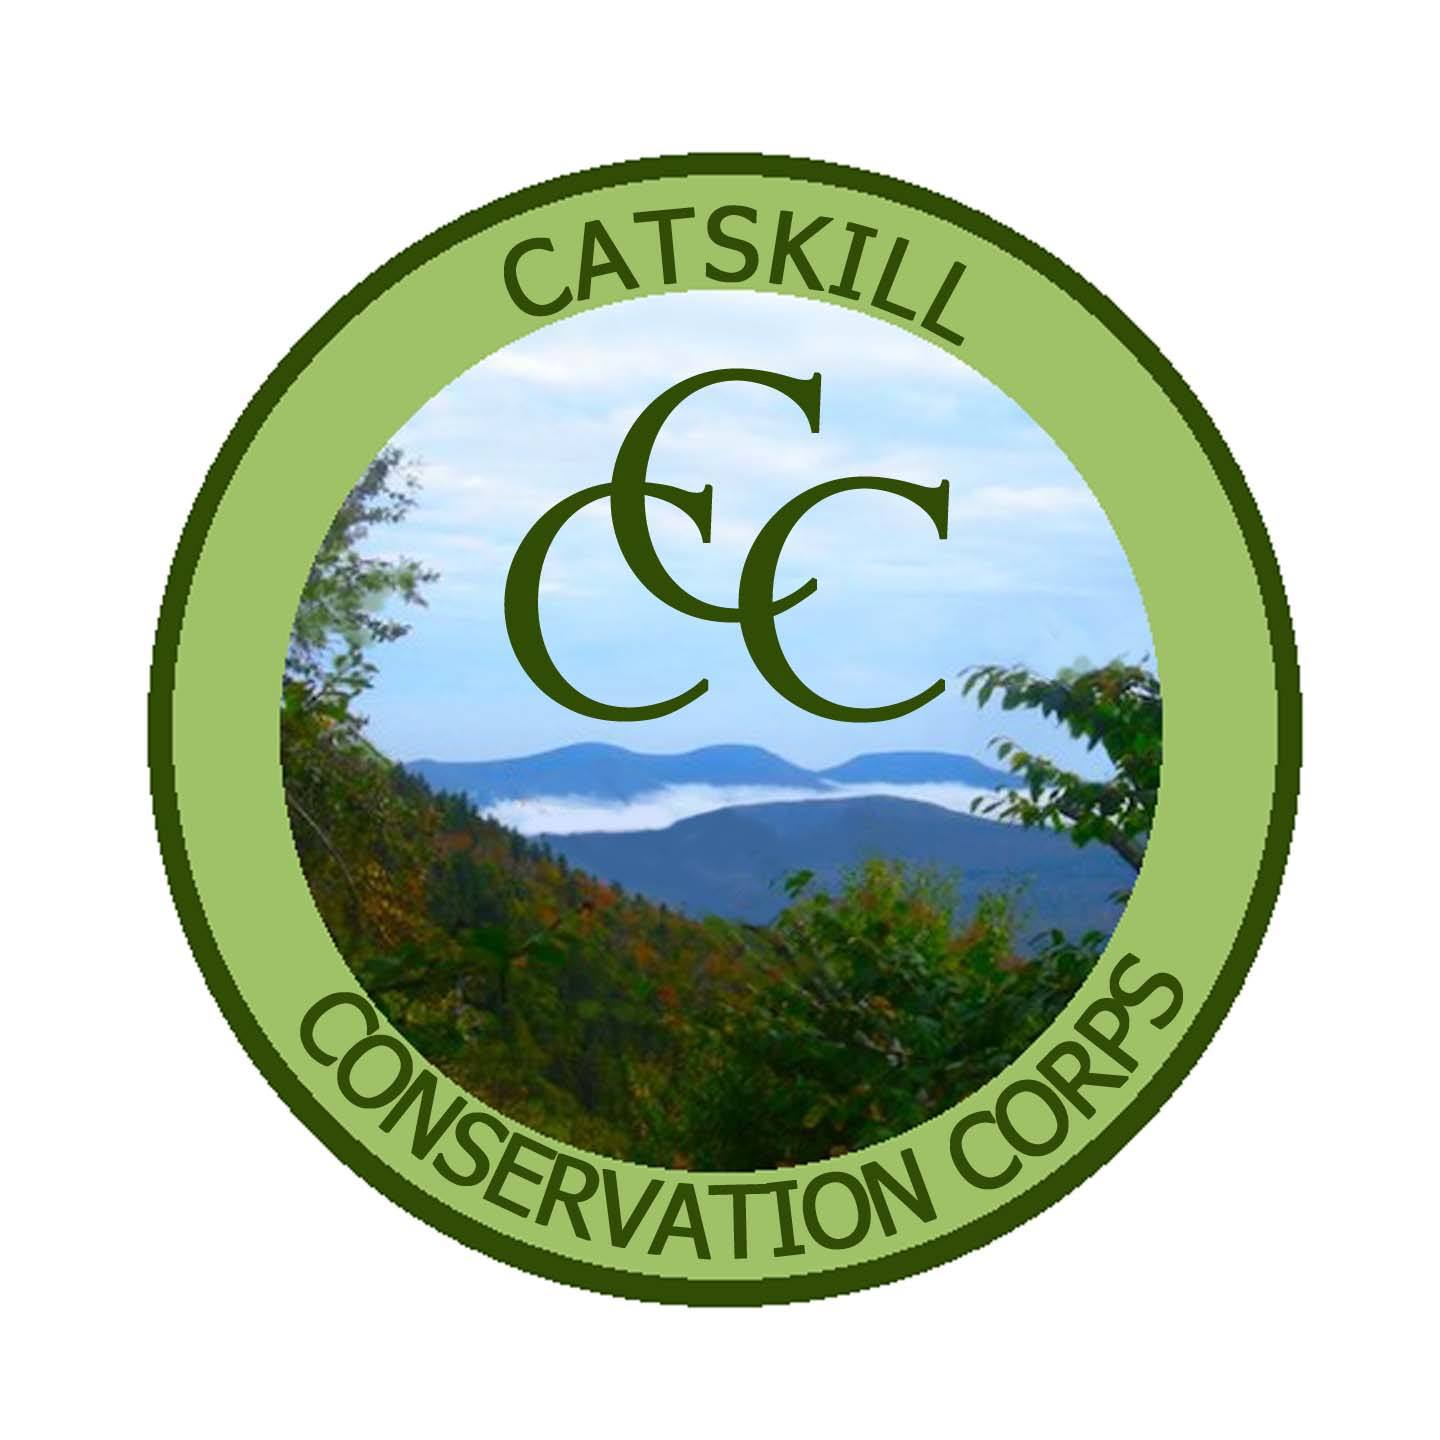 Catskill Conservation Corps logo